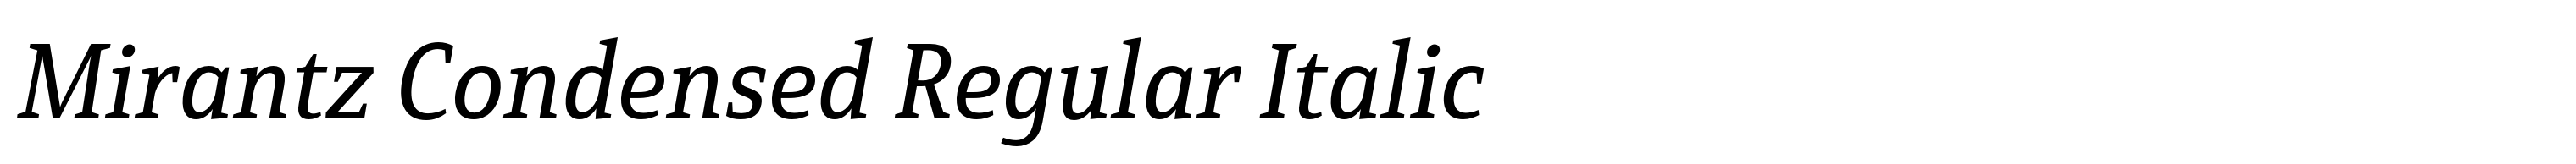 Mirantz Condensed Regular Italic